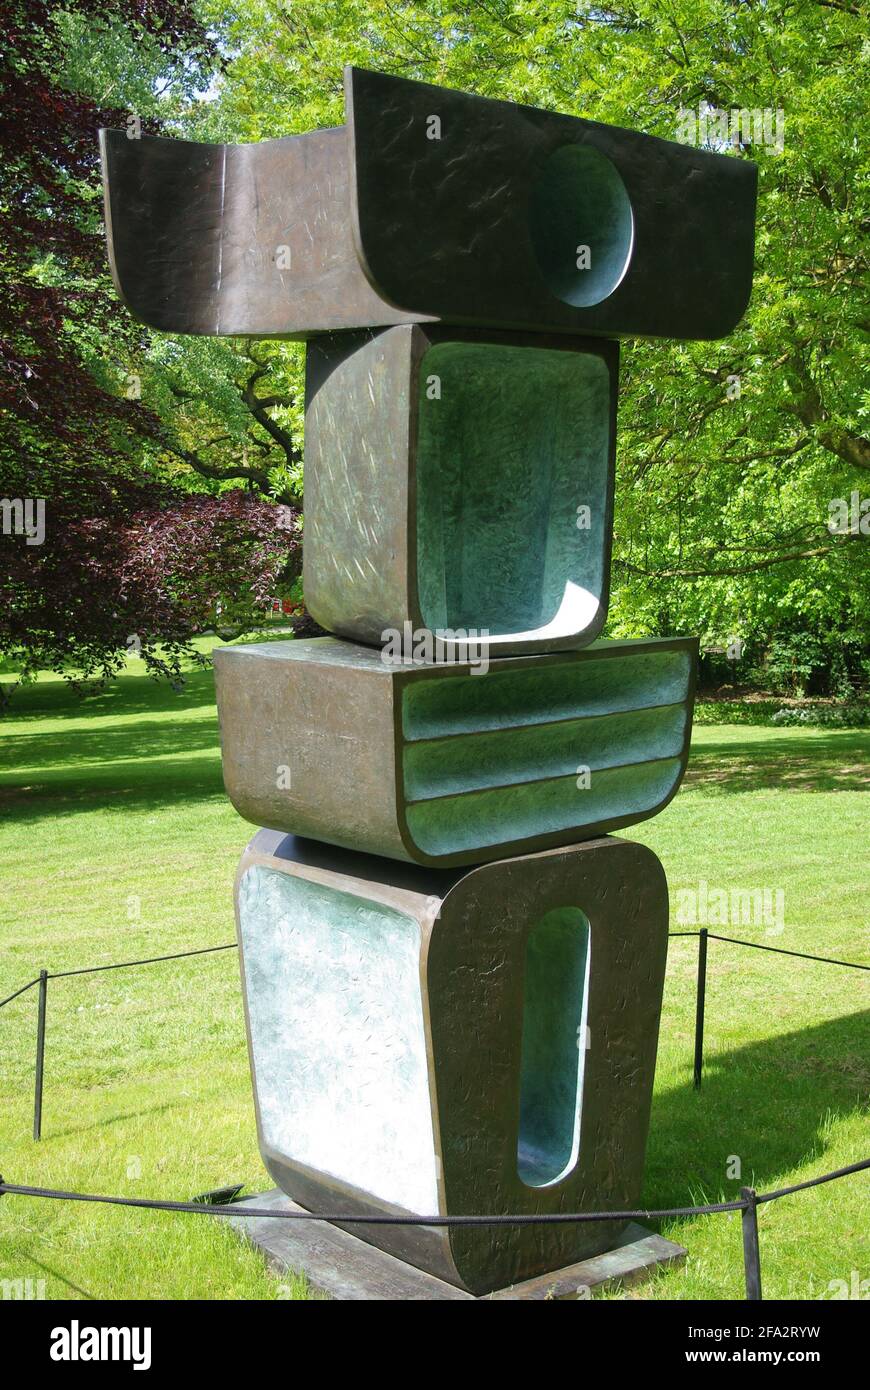 Una sola figura del grupo de esculturas de bronce “La familia del hombre” de Barbara Hepworth en Yorkshire Sculpture Park, Wakefield, Yorkshire Foto de stock